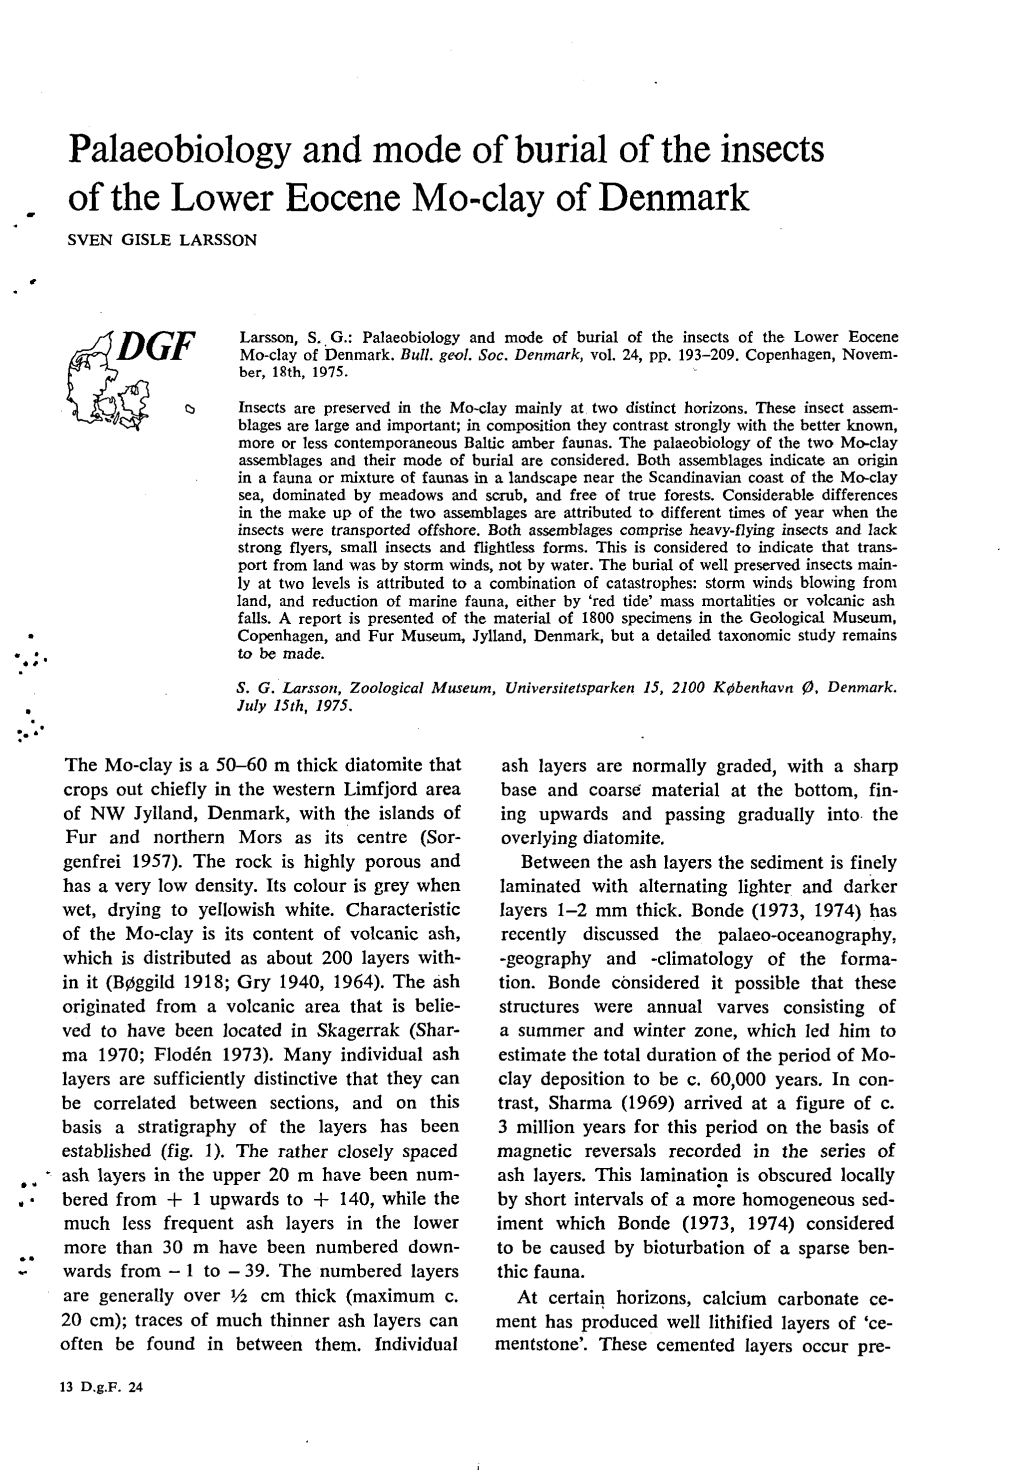 Bulletin of the Geological Society of Denmark, Vol. 24/03-04, Pp. 193-209